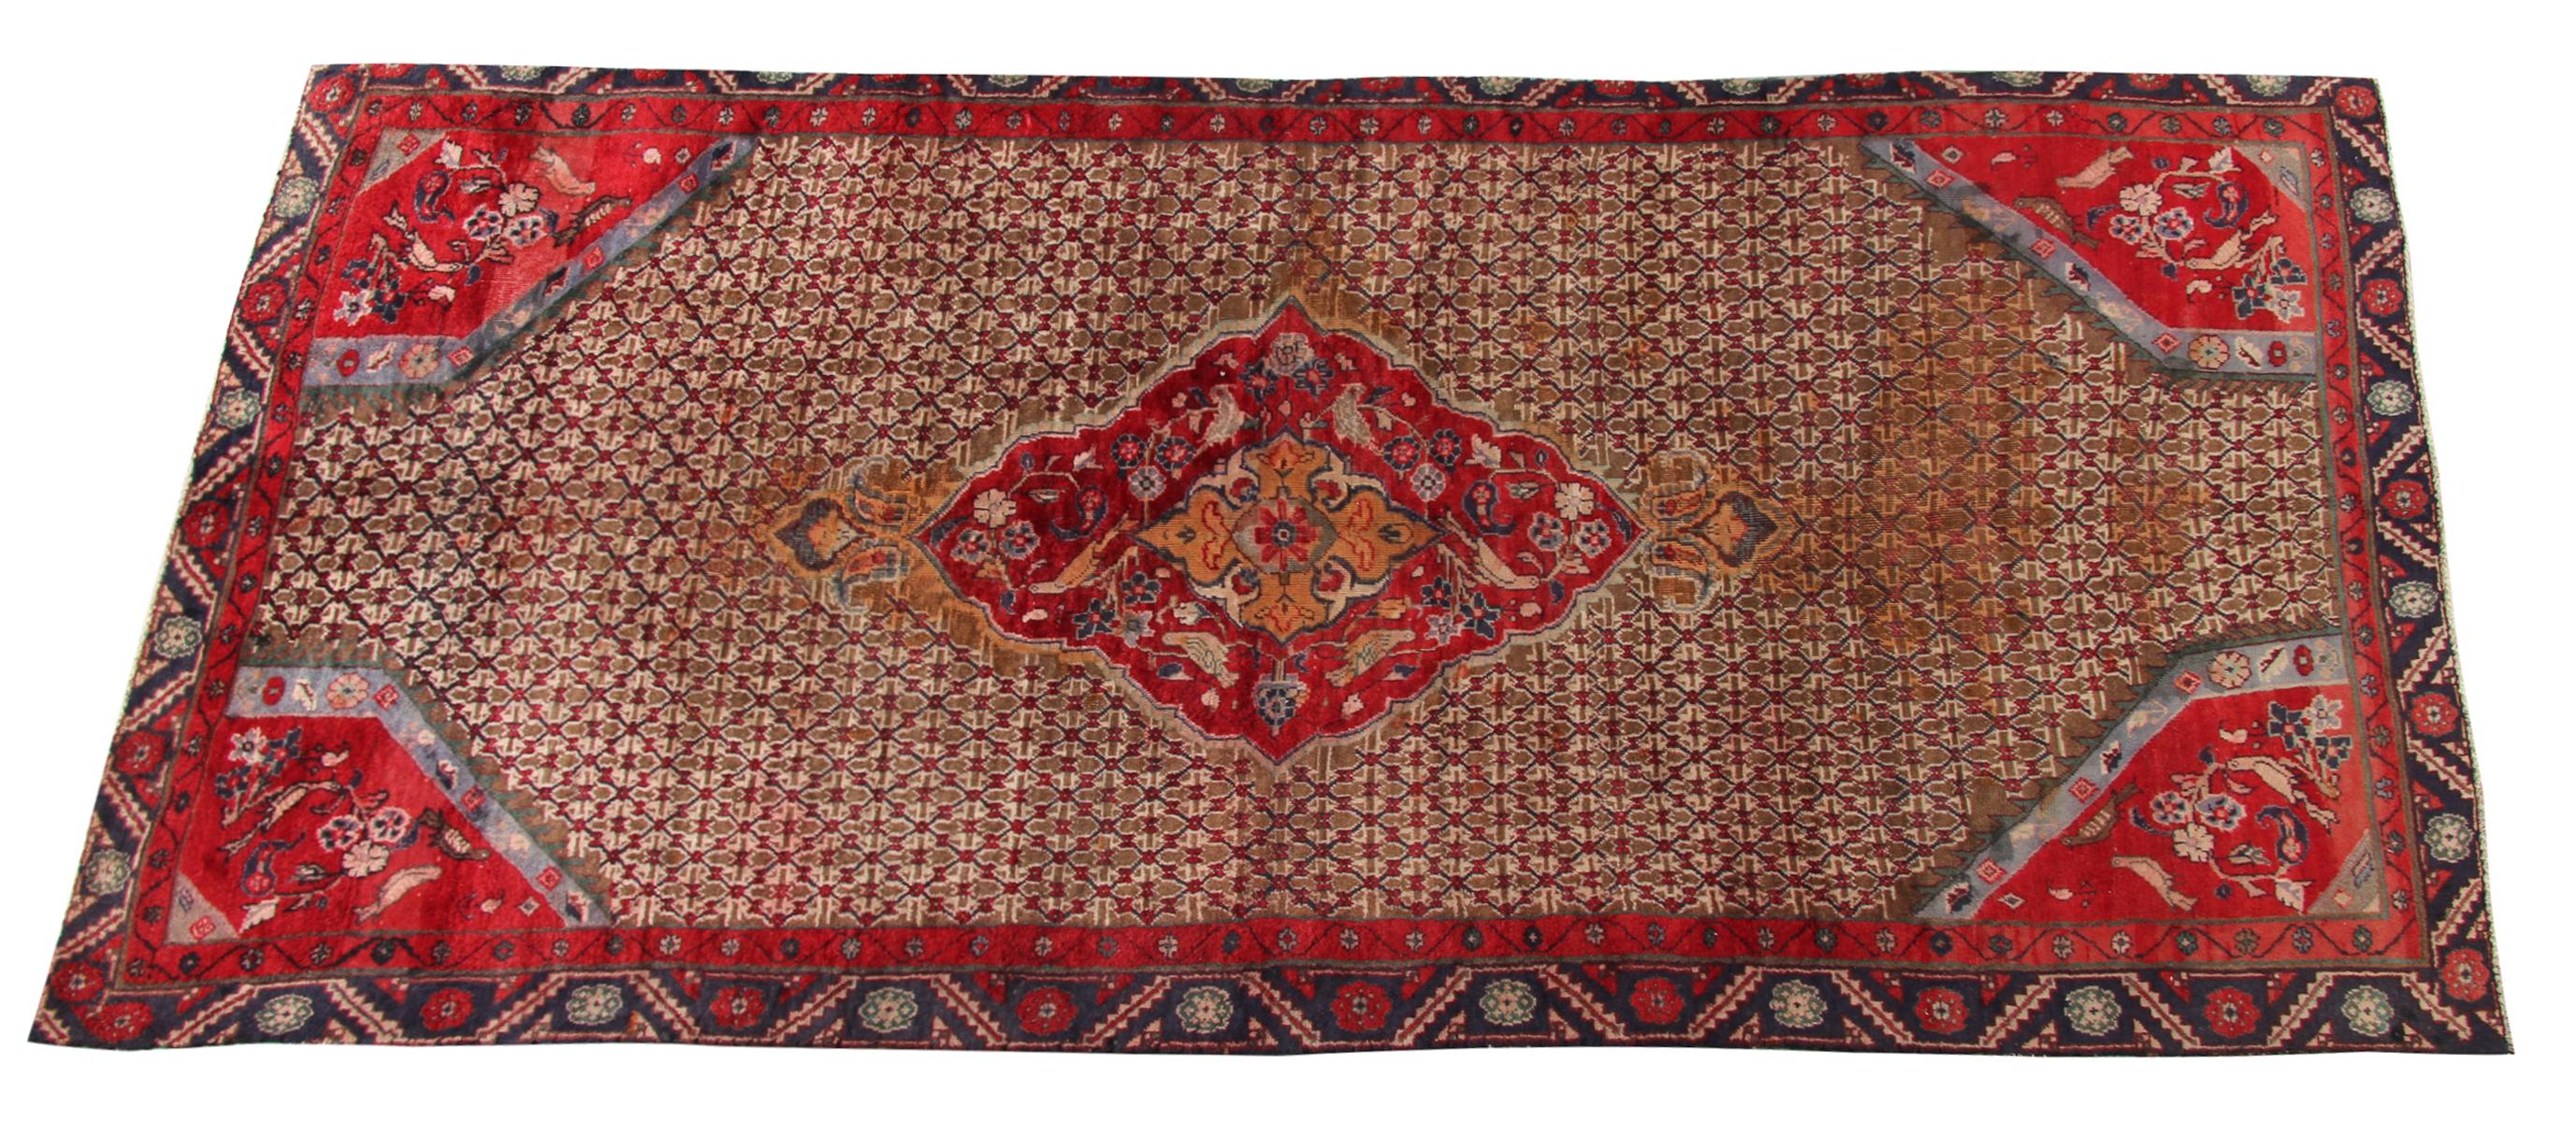 Rustic Handwoven Red Wool Runner Rug Long Traditional Oriental Vintage Carpet For Sale